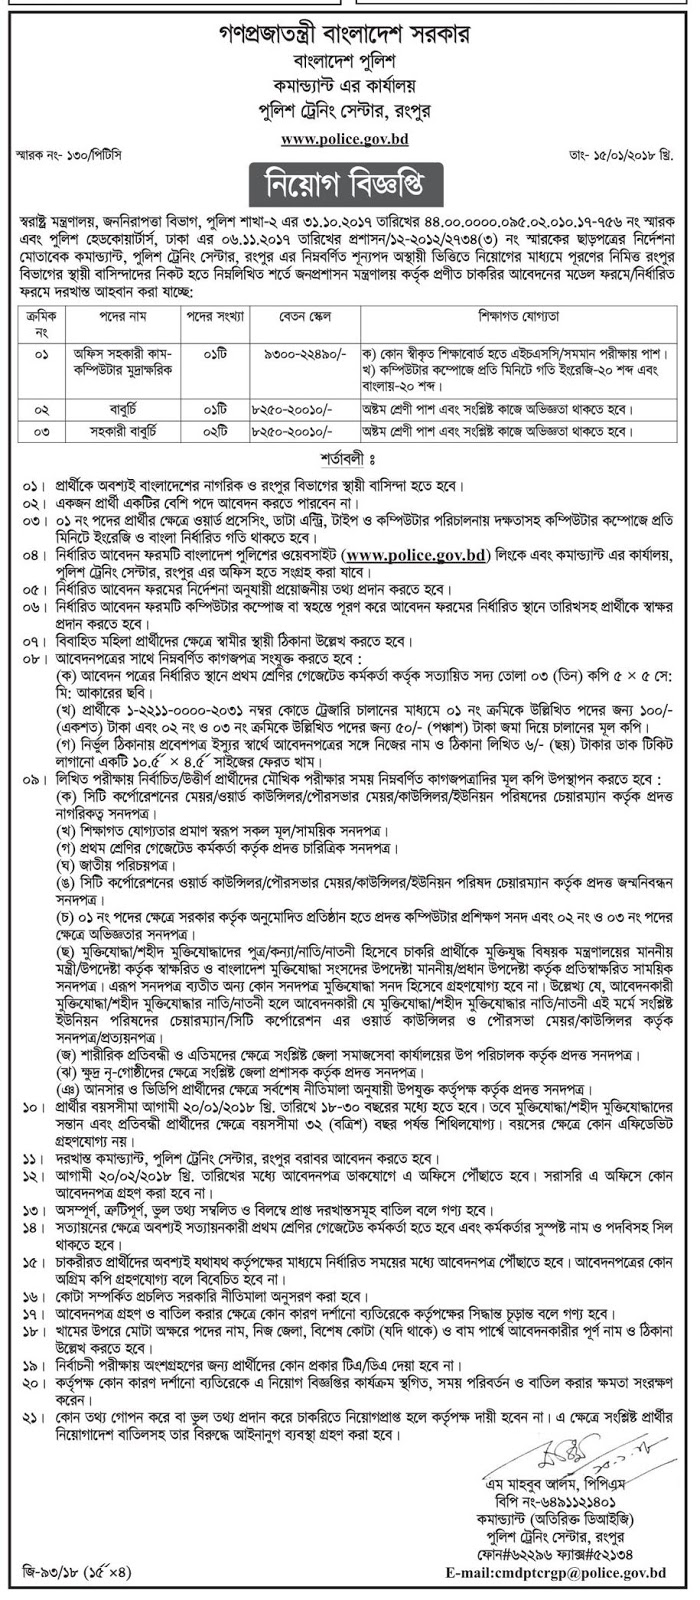 Bangladesh Police Job Circular 2018